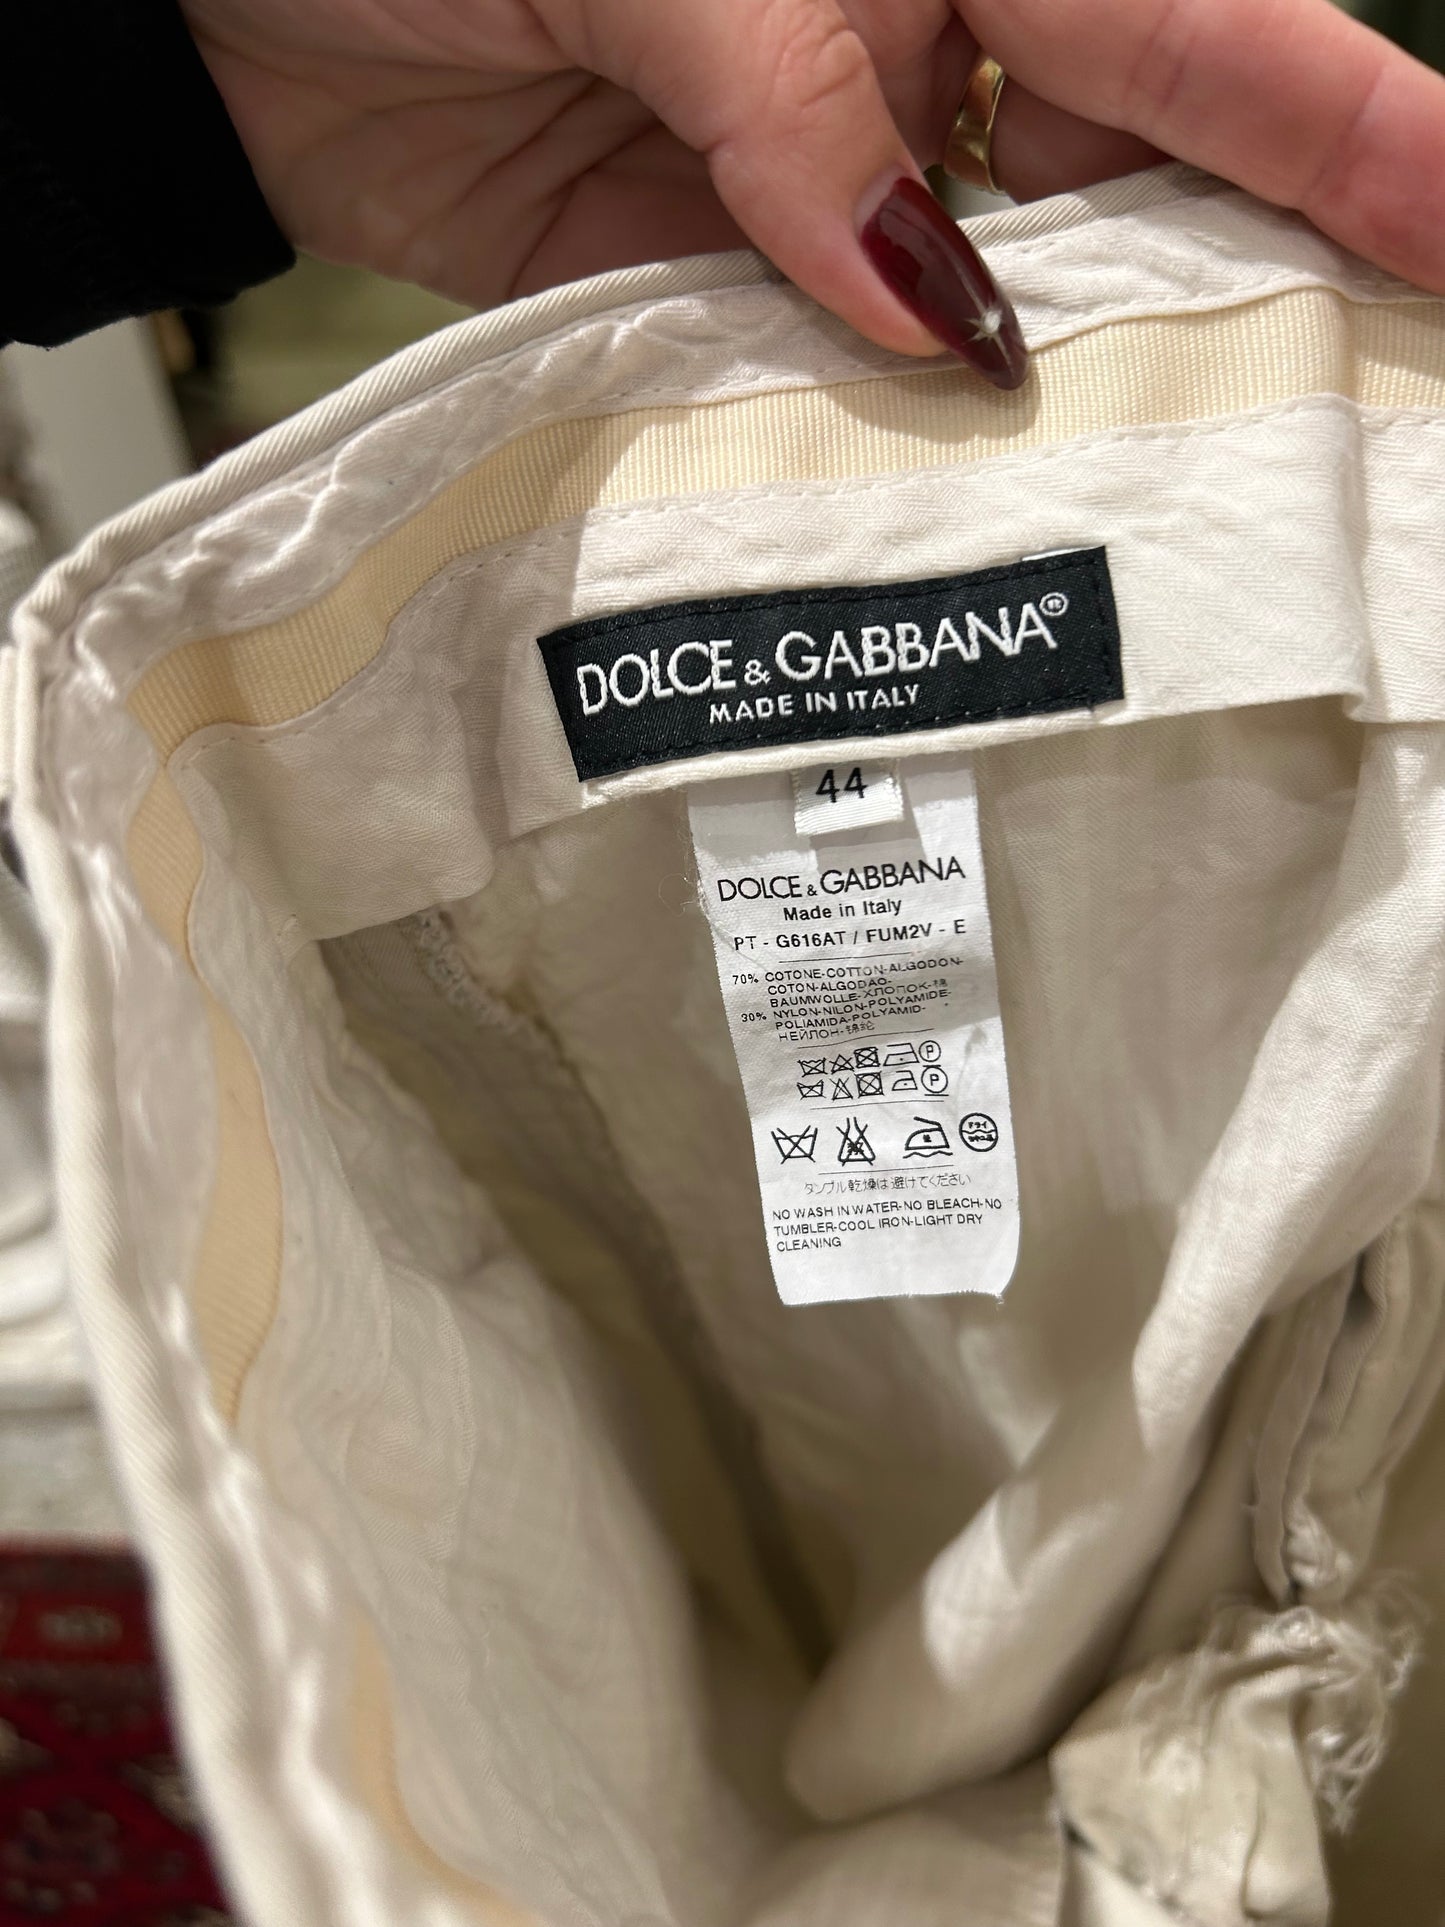 D&G Dolce Gabbana pants